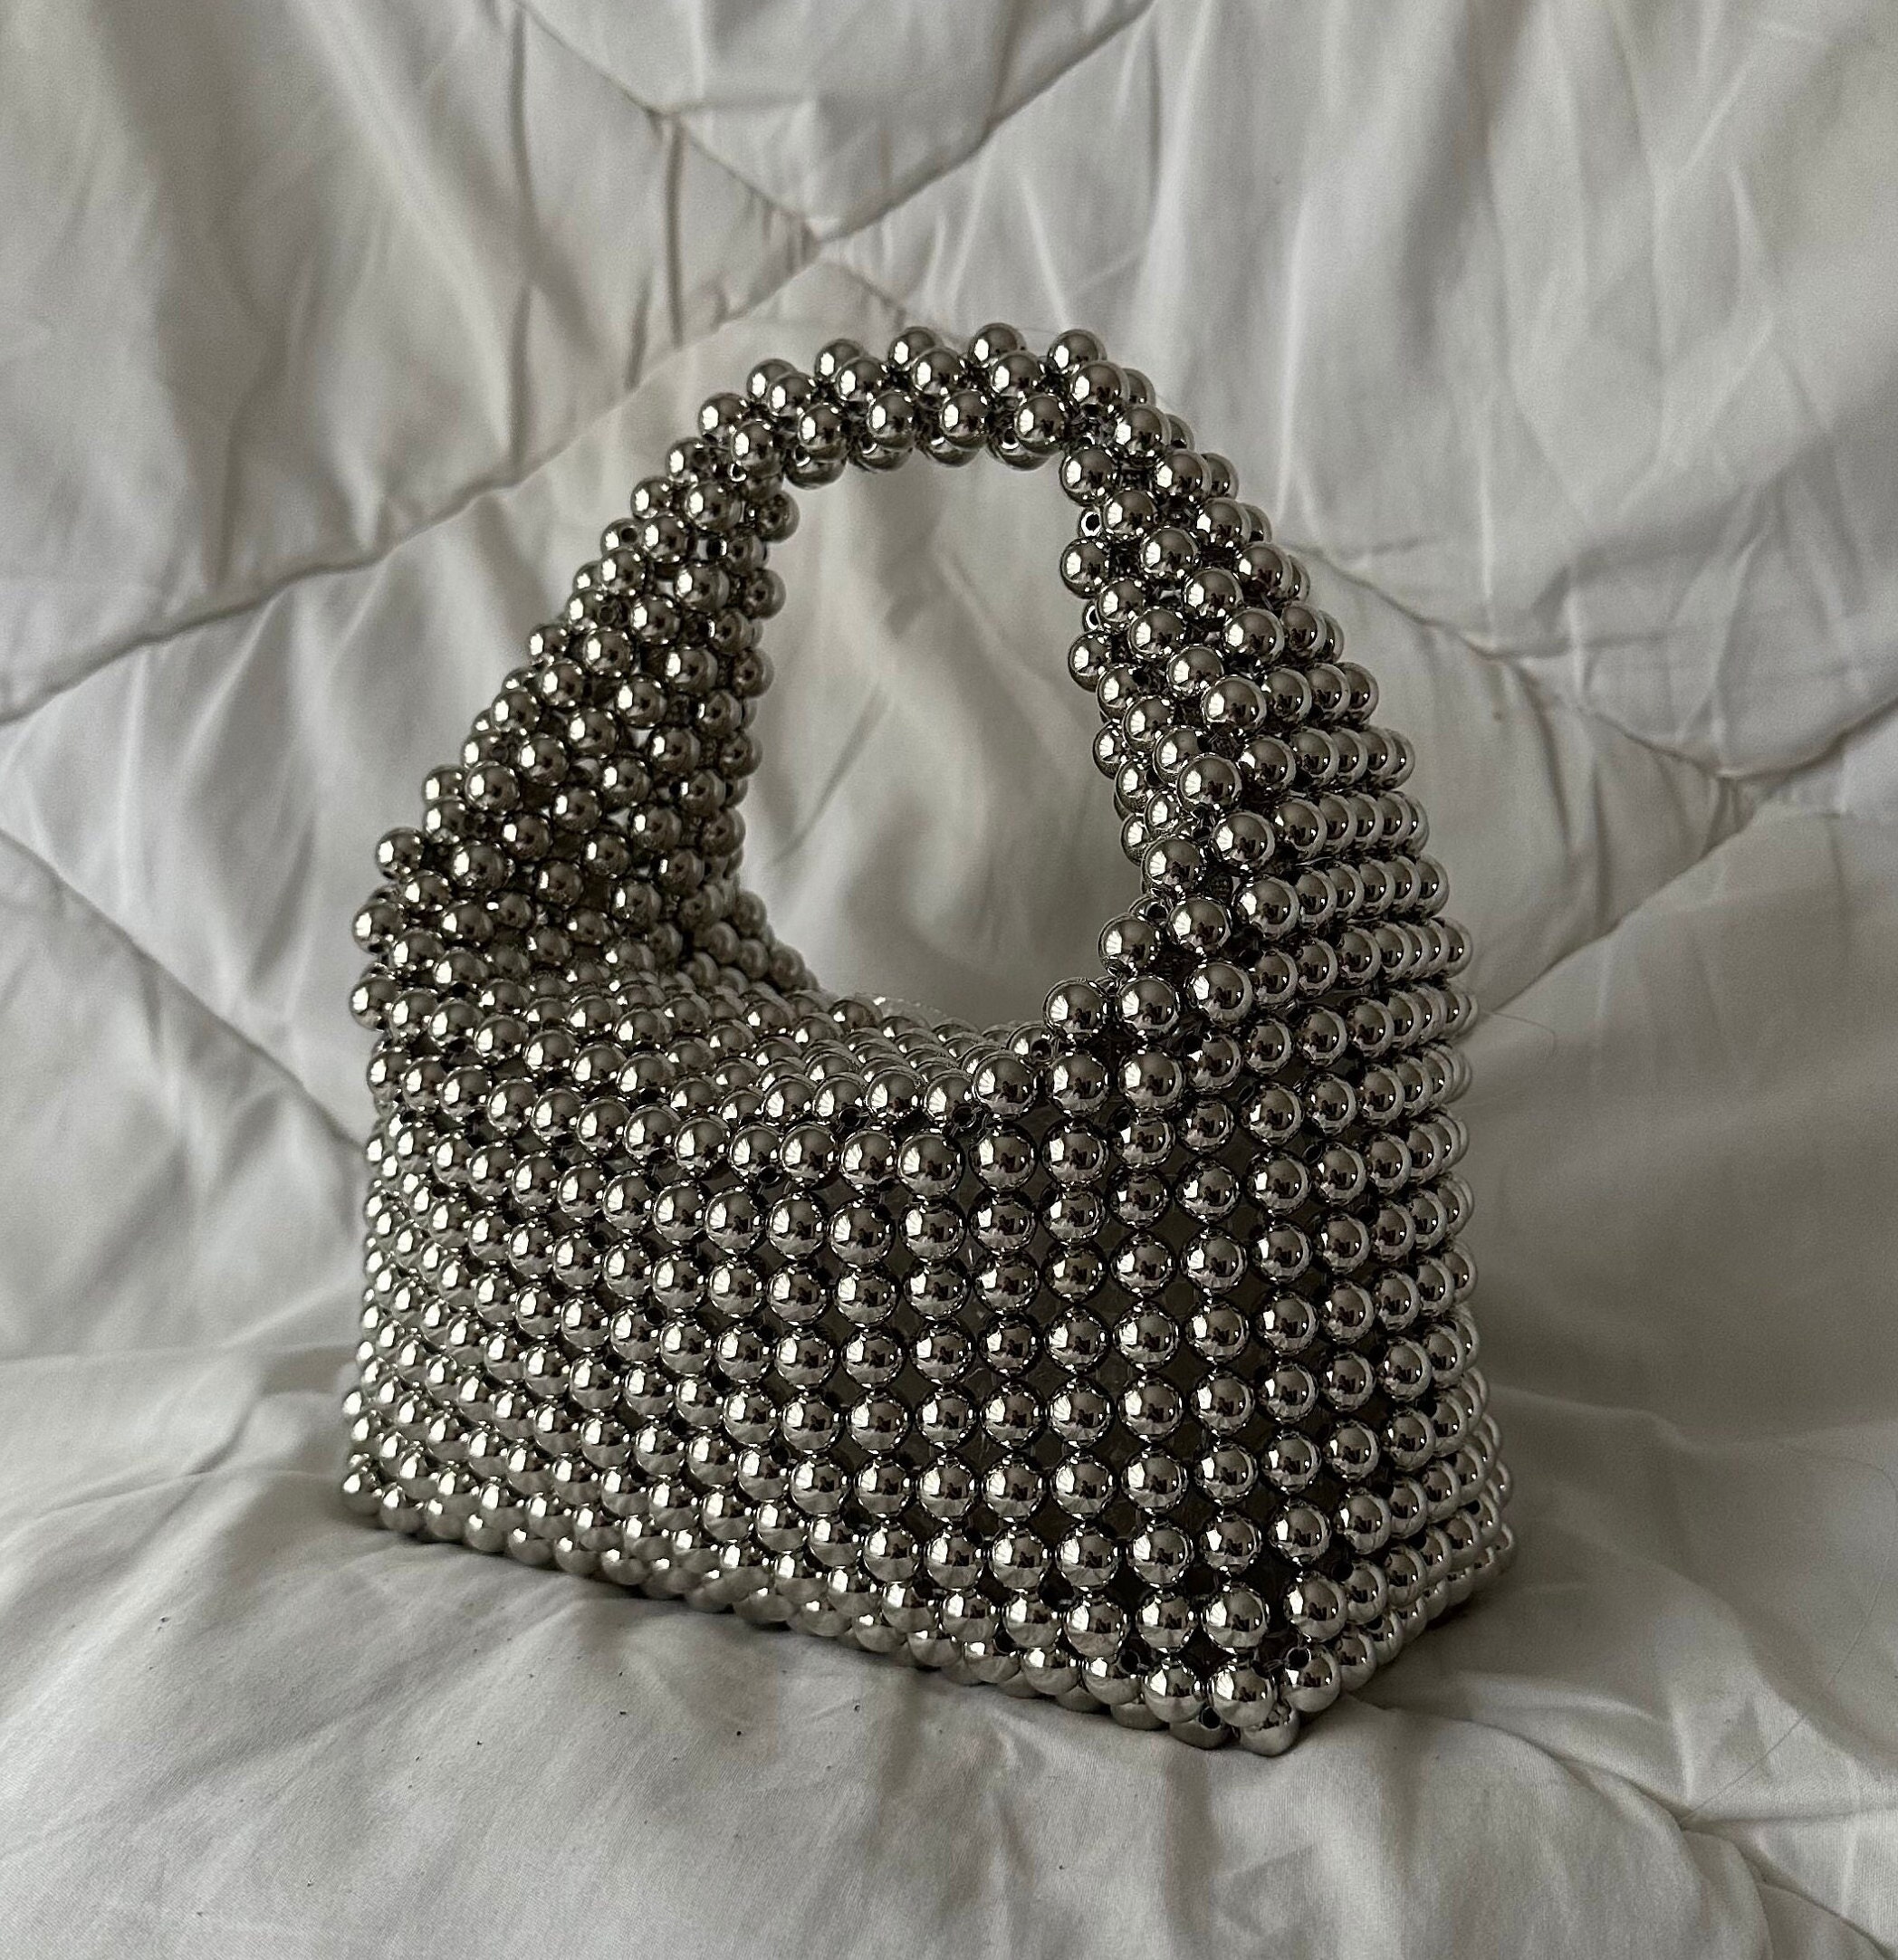 Pearl Beaded Bag, Bridal Pearl Bag, Wedding Pearl Purse, Bridal Clutch Bag,  Pearl Shoulder Bag, Bead Pearl Purse, Vintage Pearl Bag 